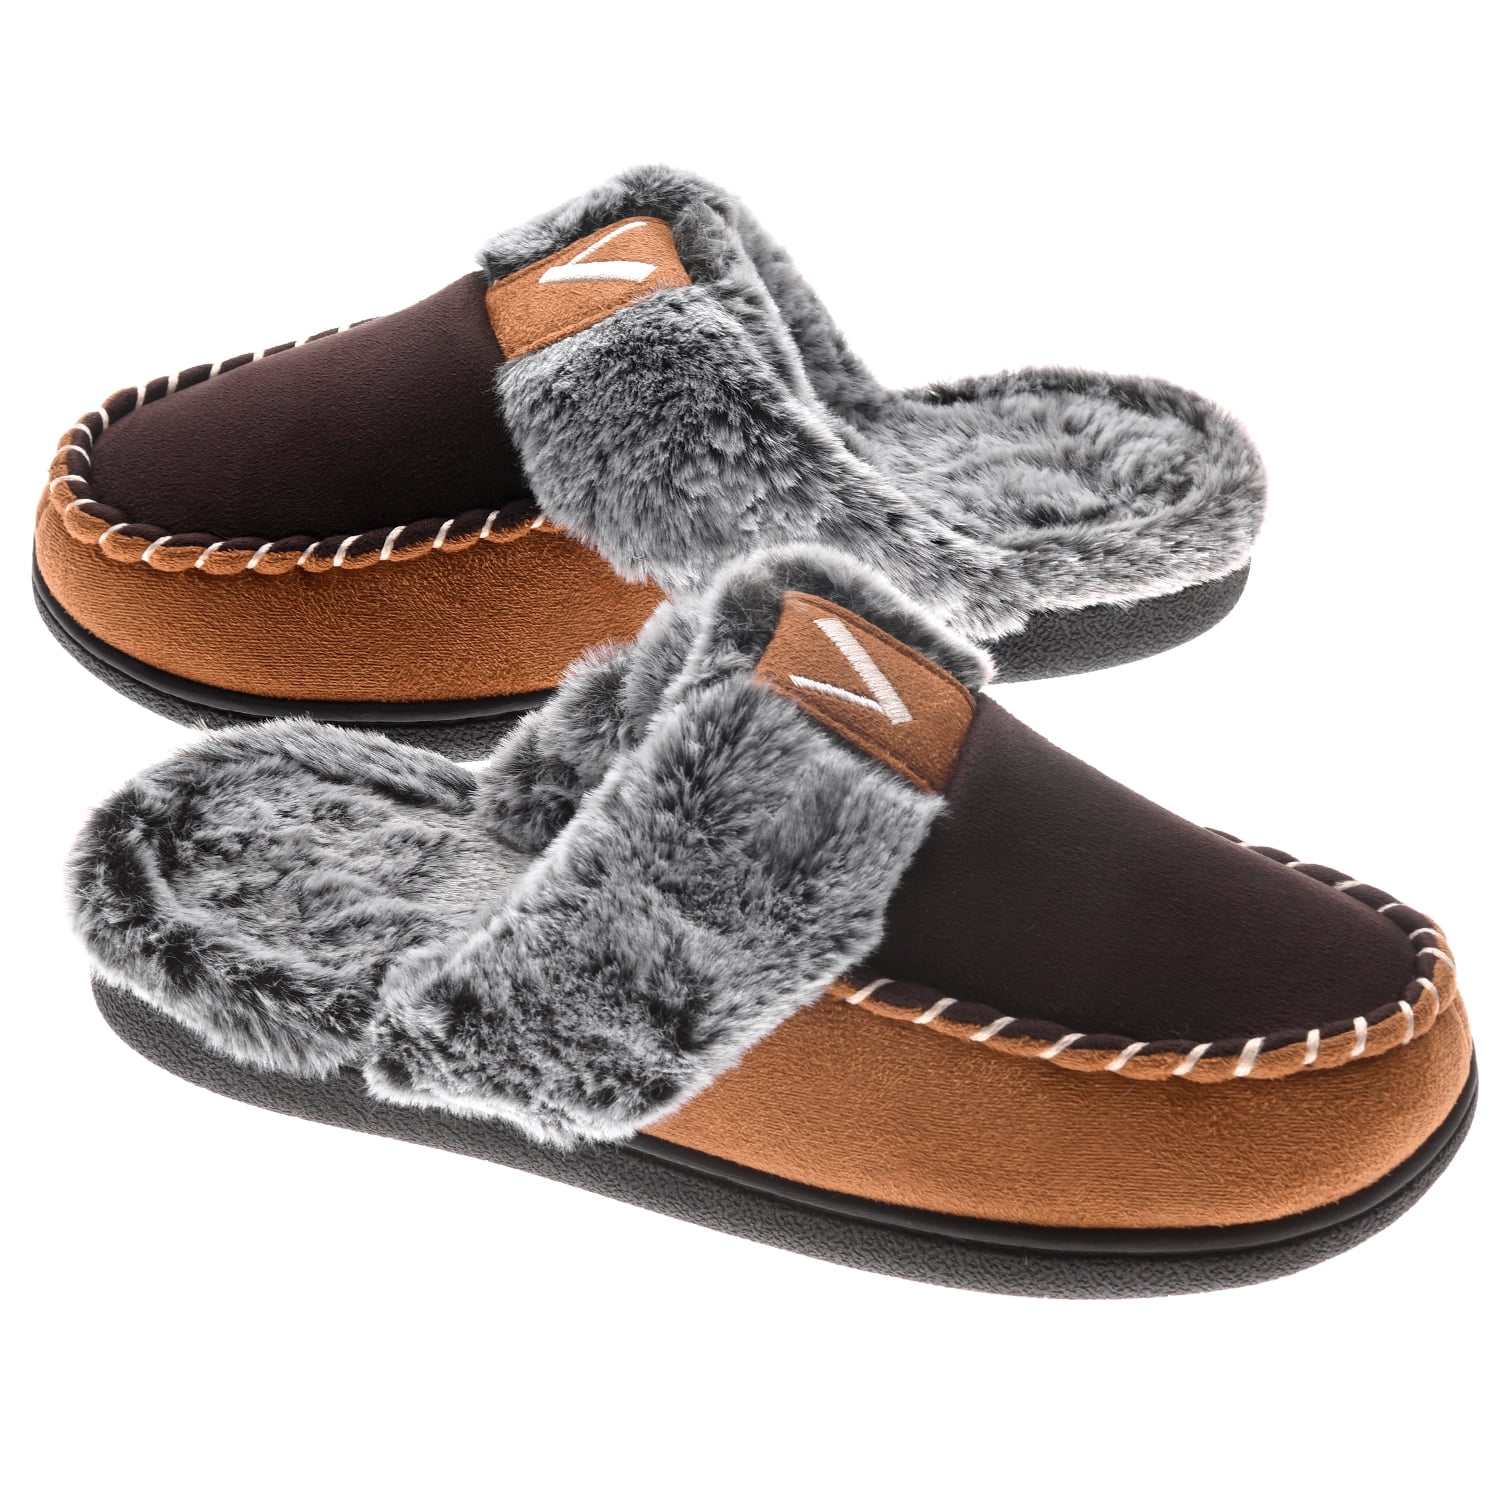 EZ Feet Women’s Microsuede or Plaid Moccasin Memory Foam Slipper with Plush Faux Fur Lining 